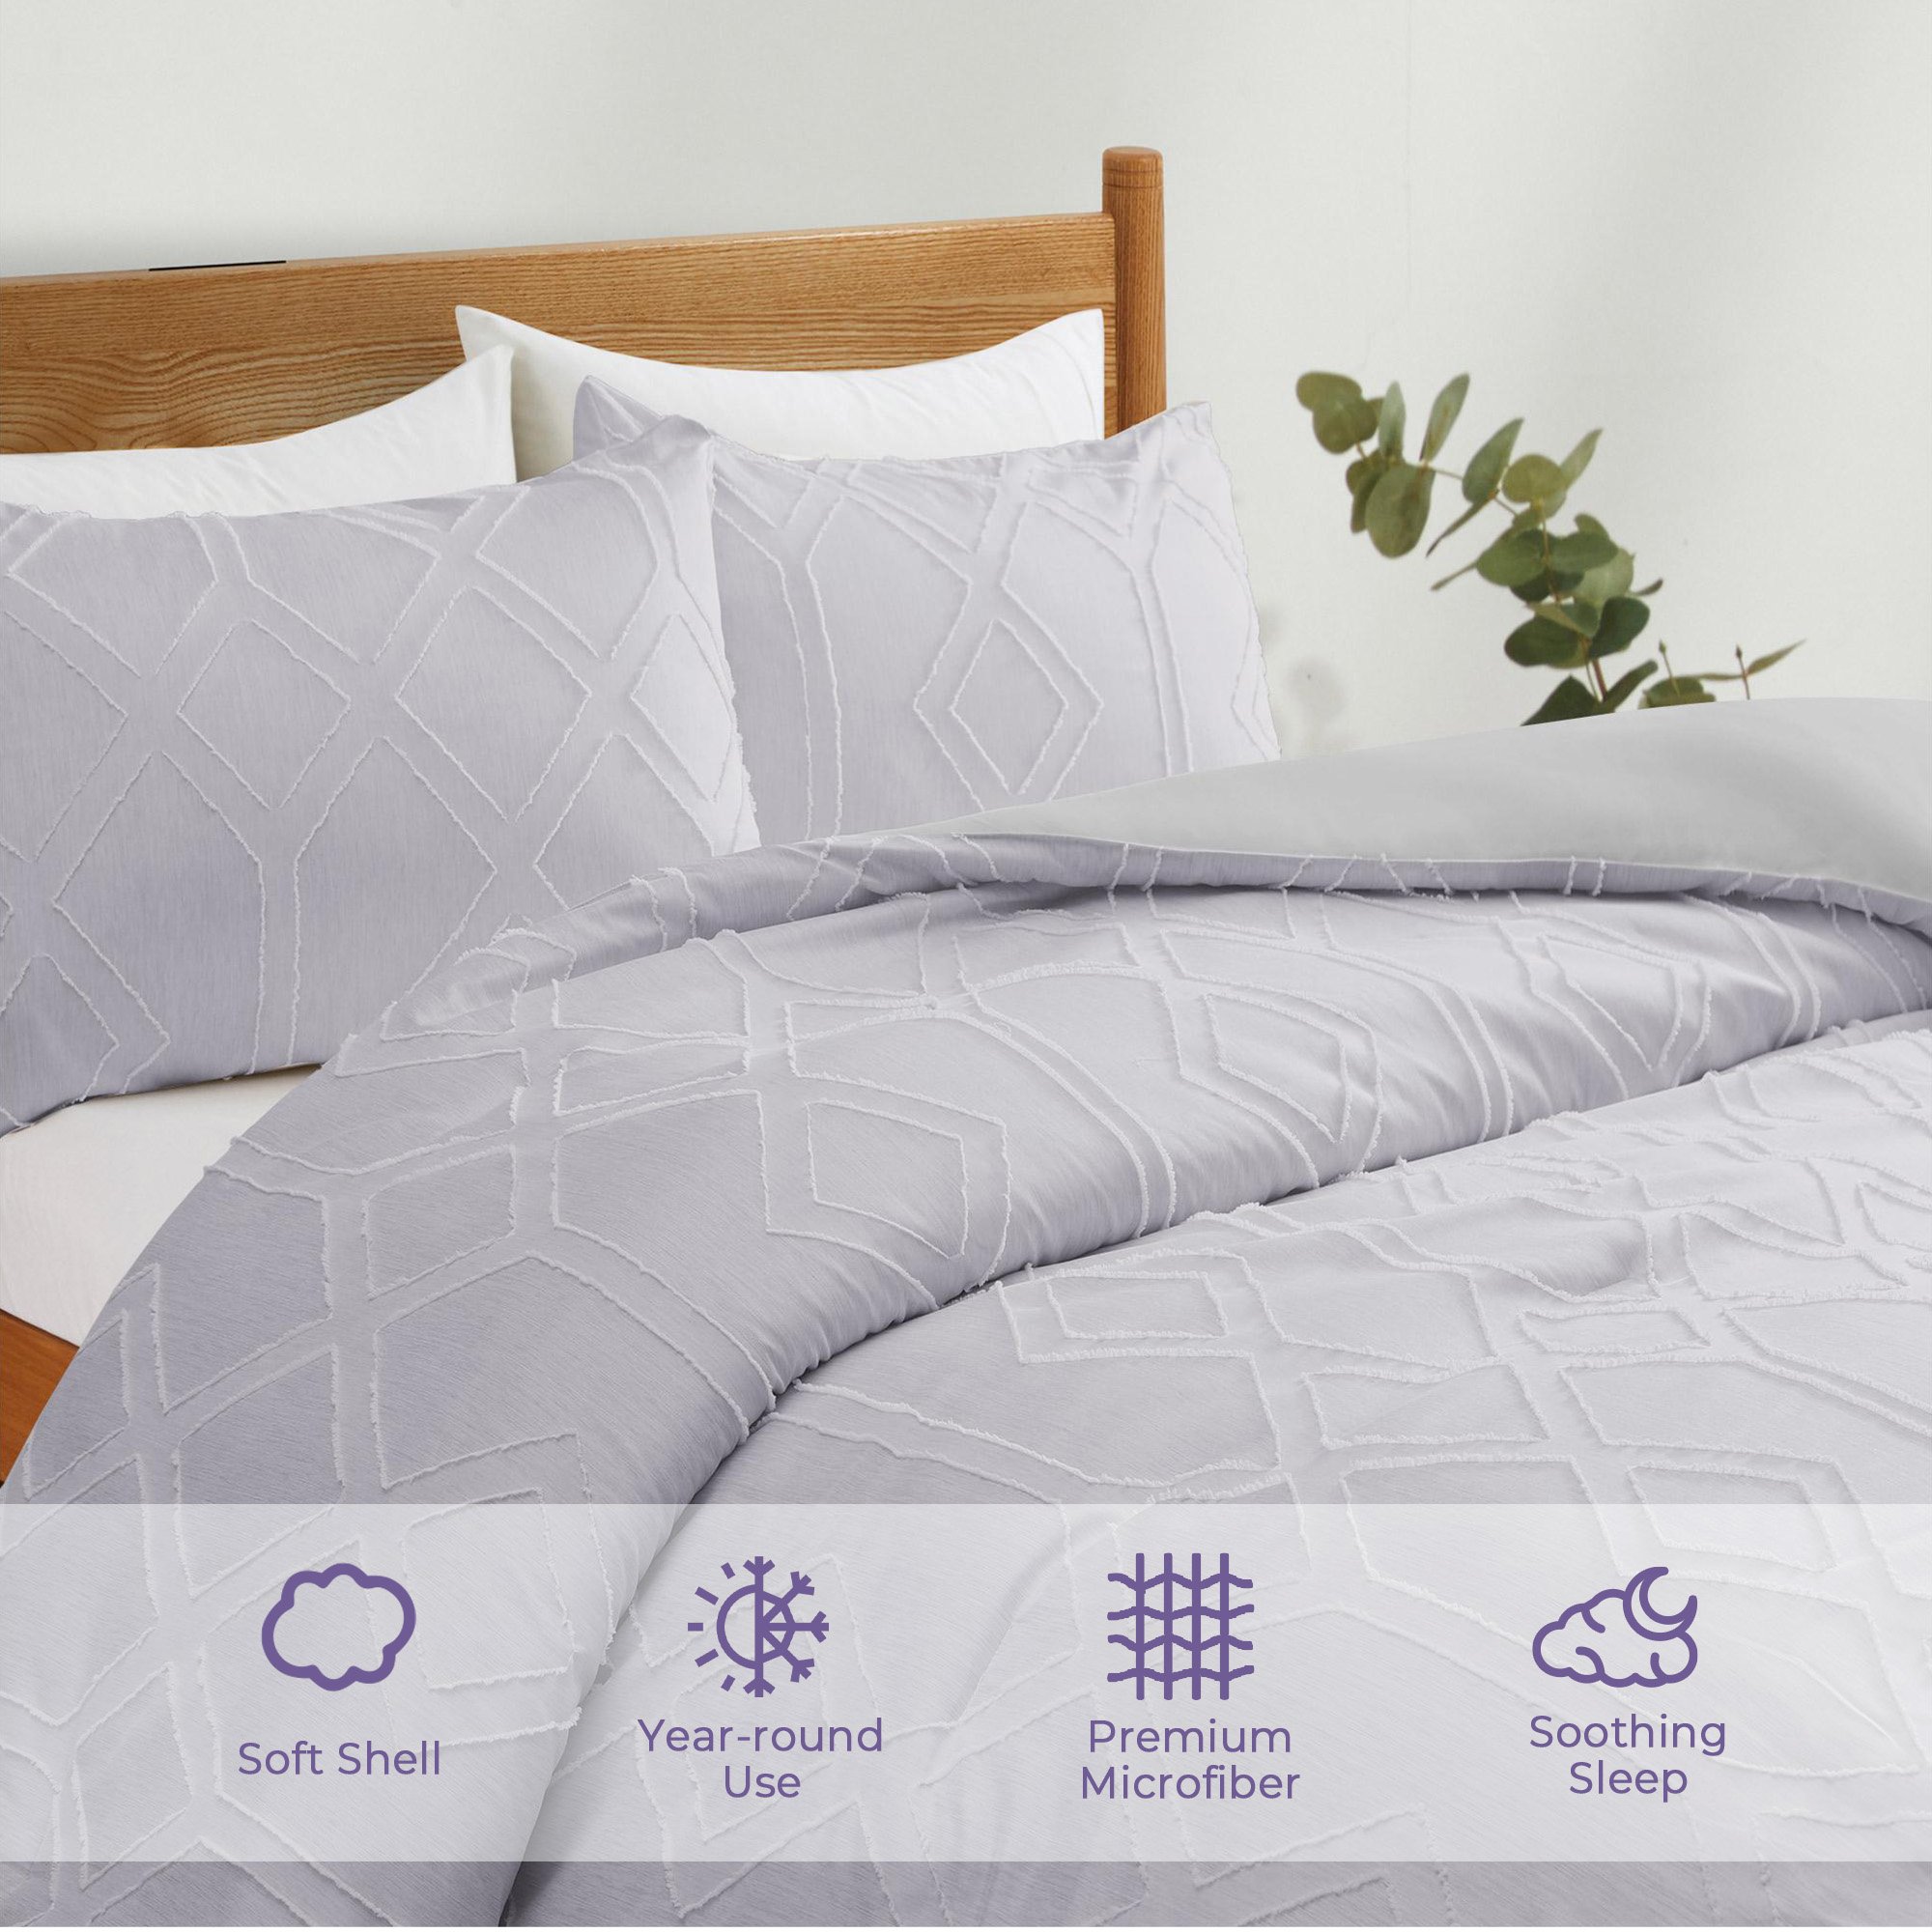 Comforter Sets Microfiber Down Alternative Bedspreads Bedding Set - Twin Size